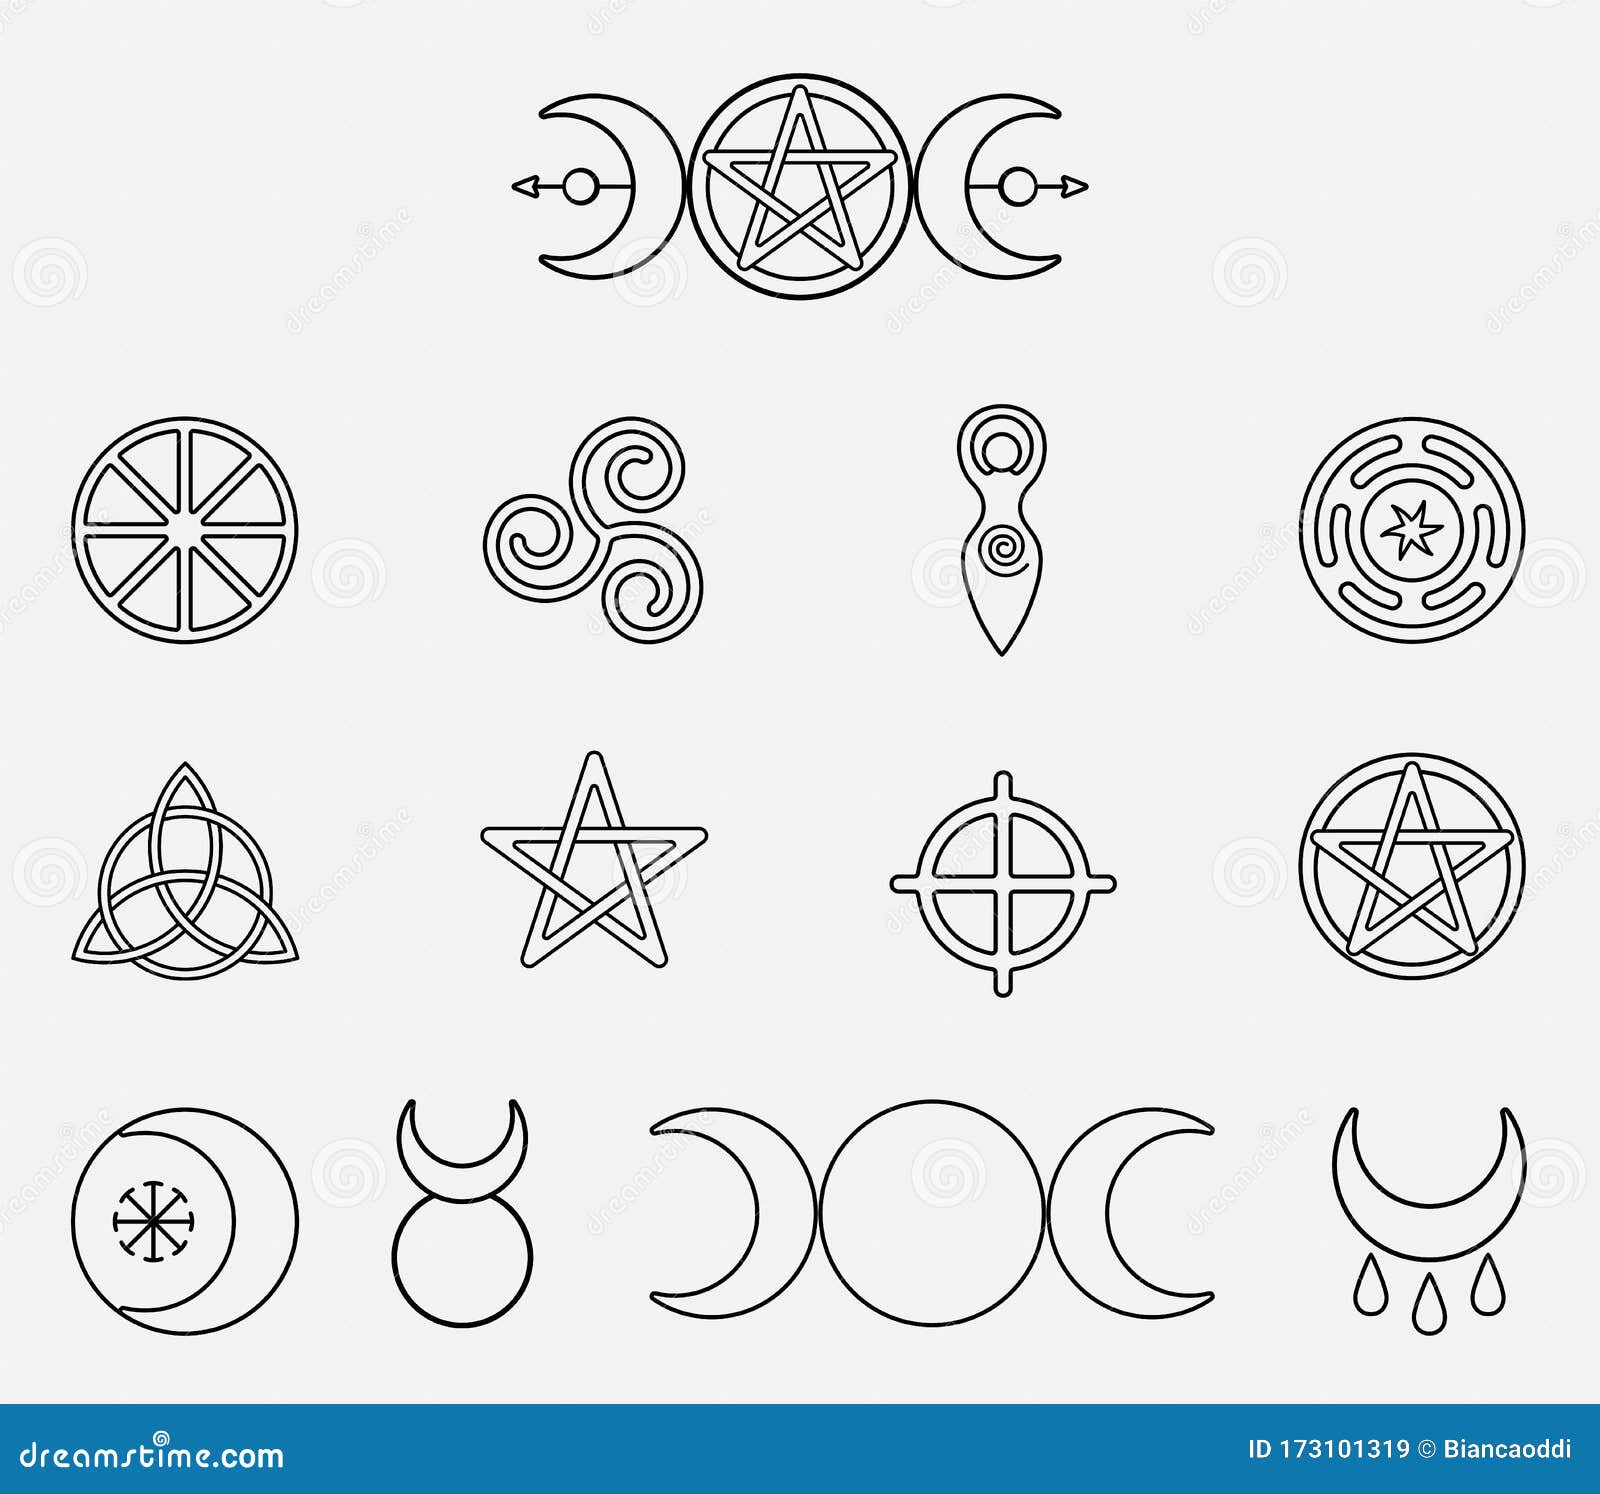 god signs and symbols